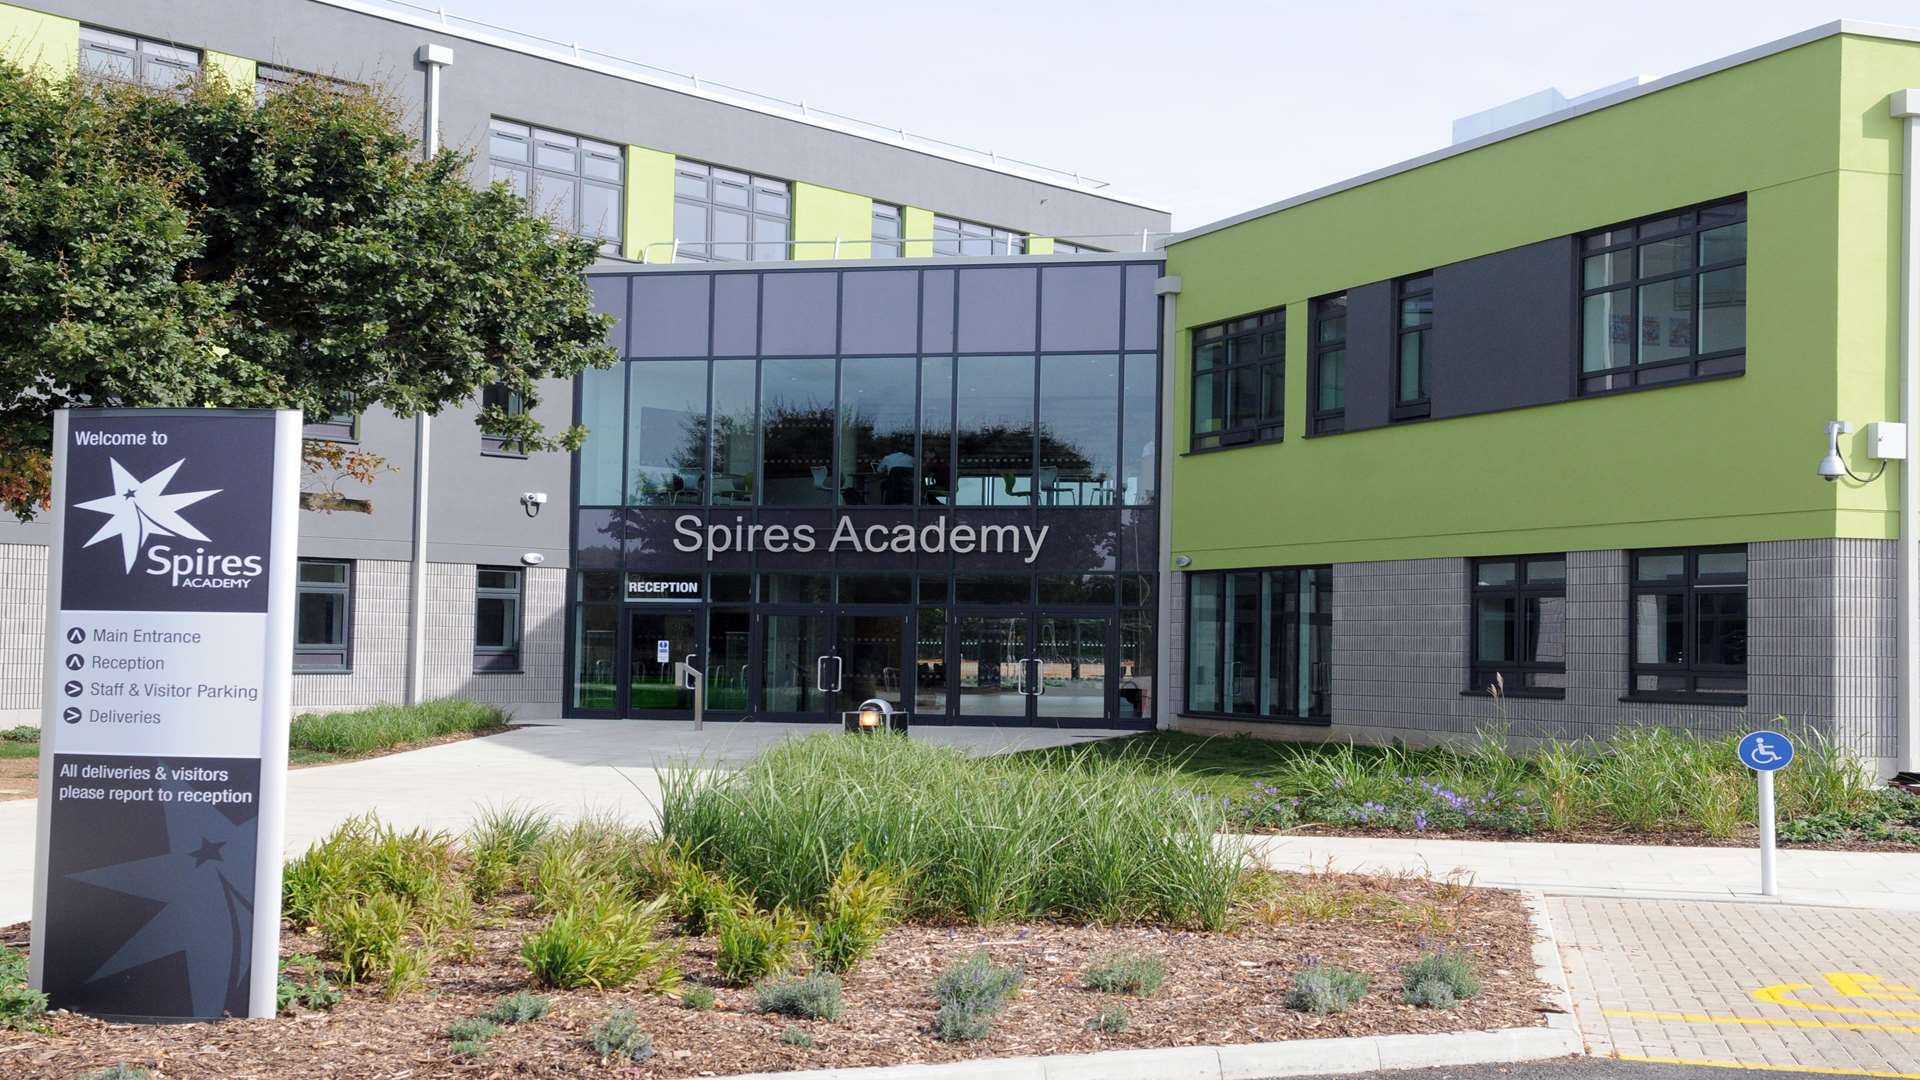 The Spires Academy, Sturry